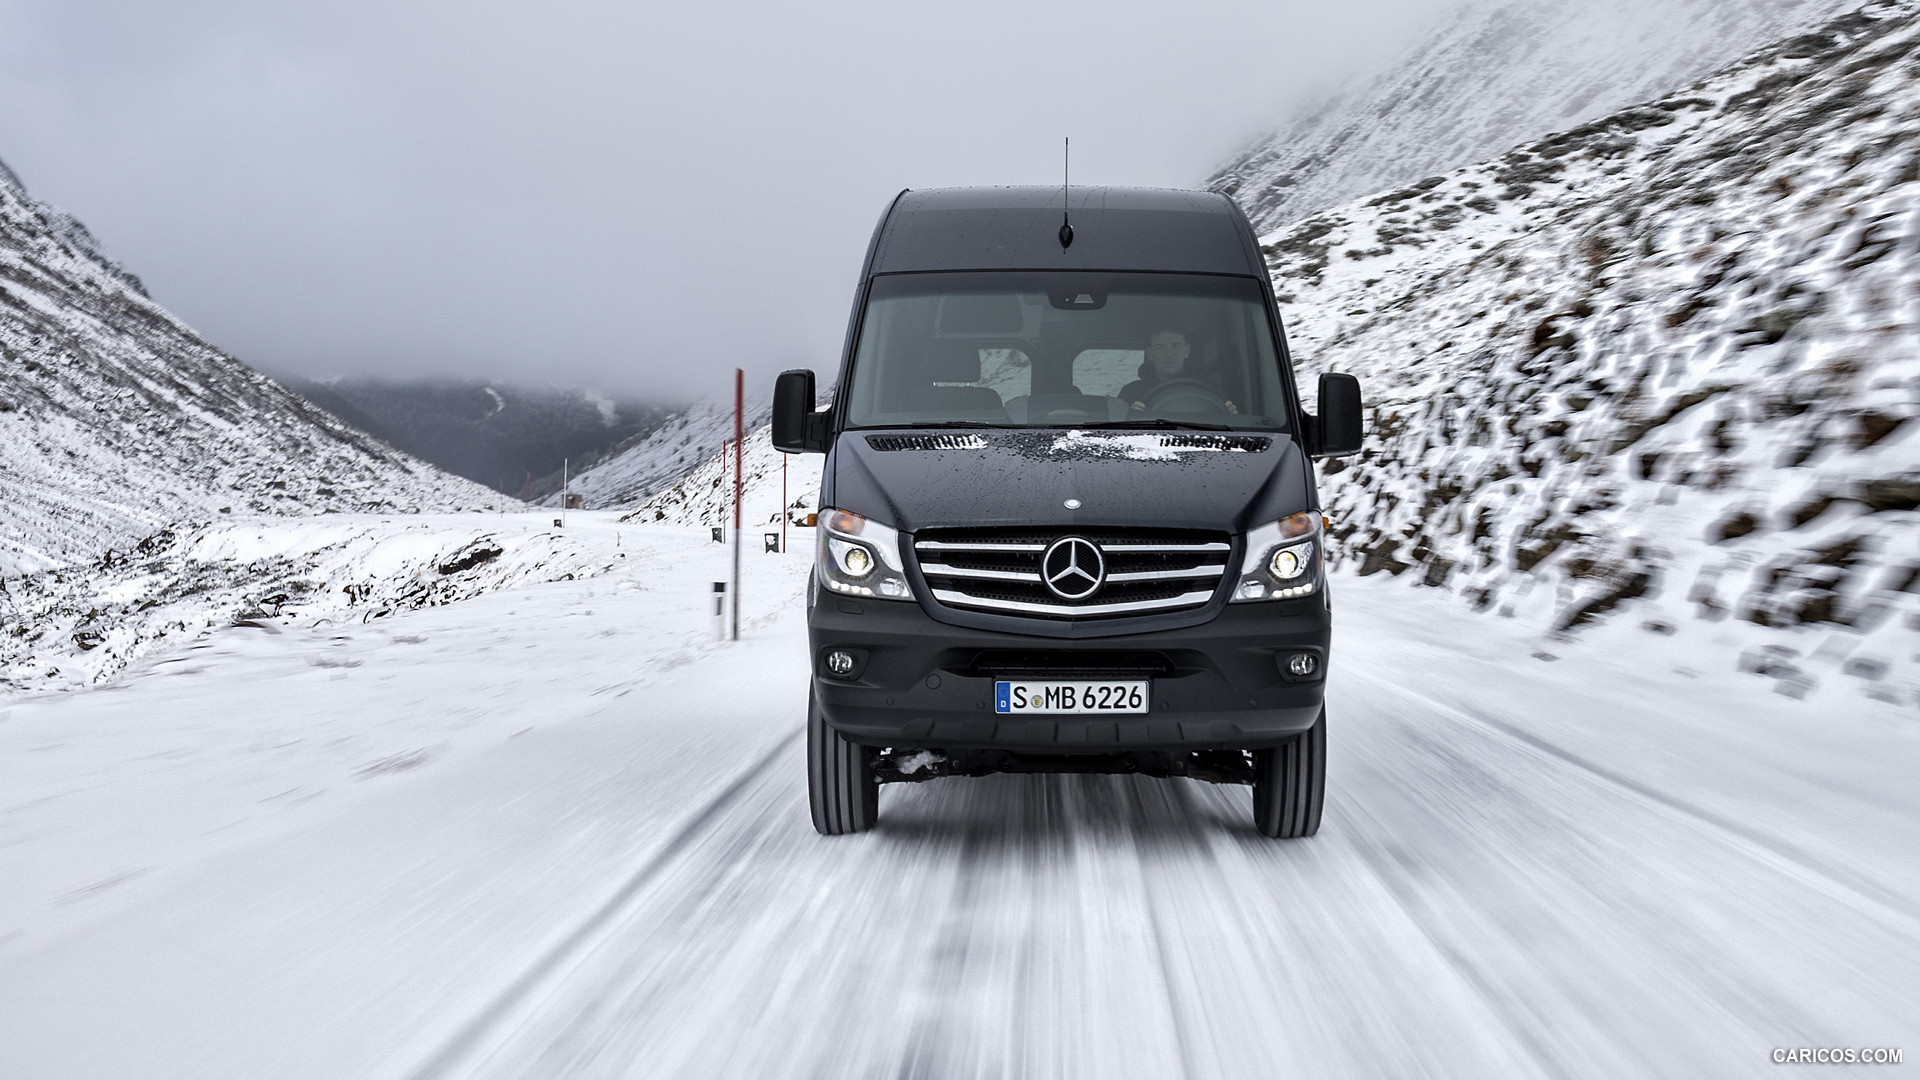 2015 Mercedes-Benz Sprinter 316 BlueTec 4X4 - In Snow - Front, #13 of 126